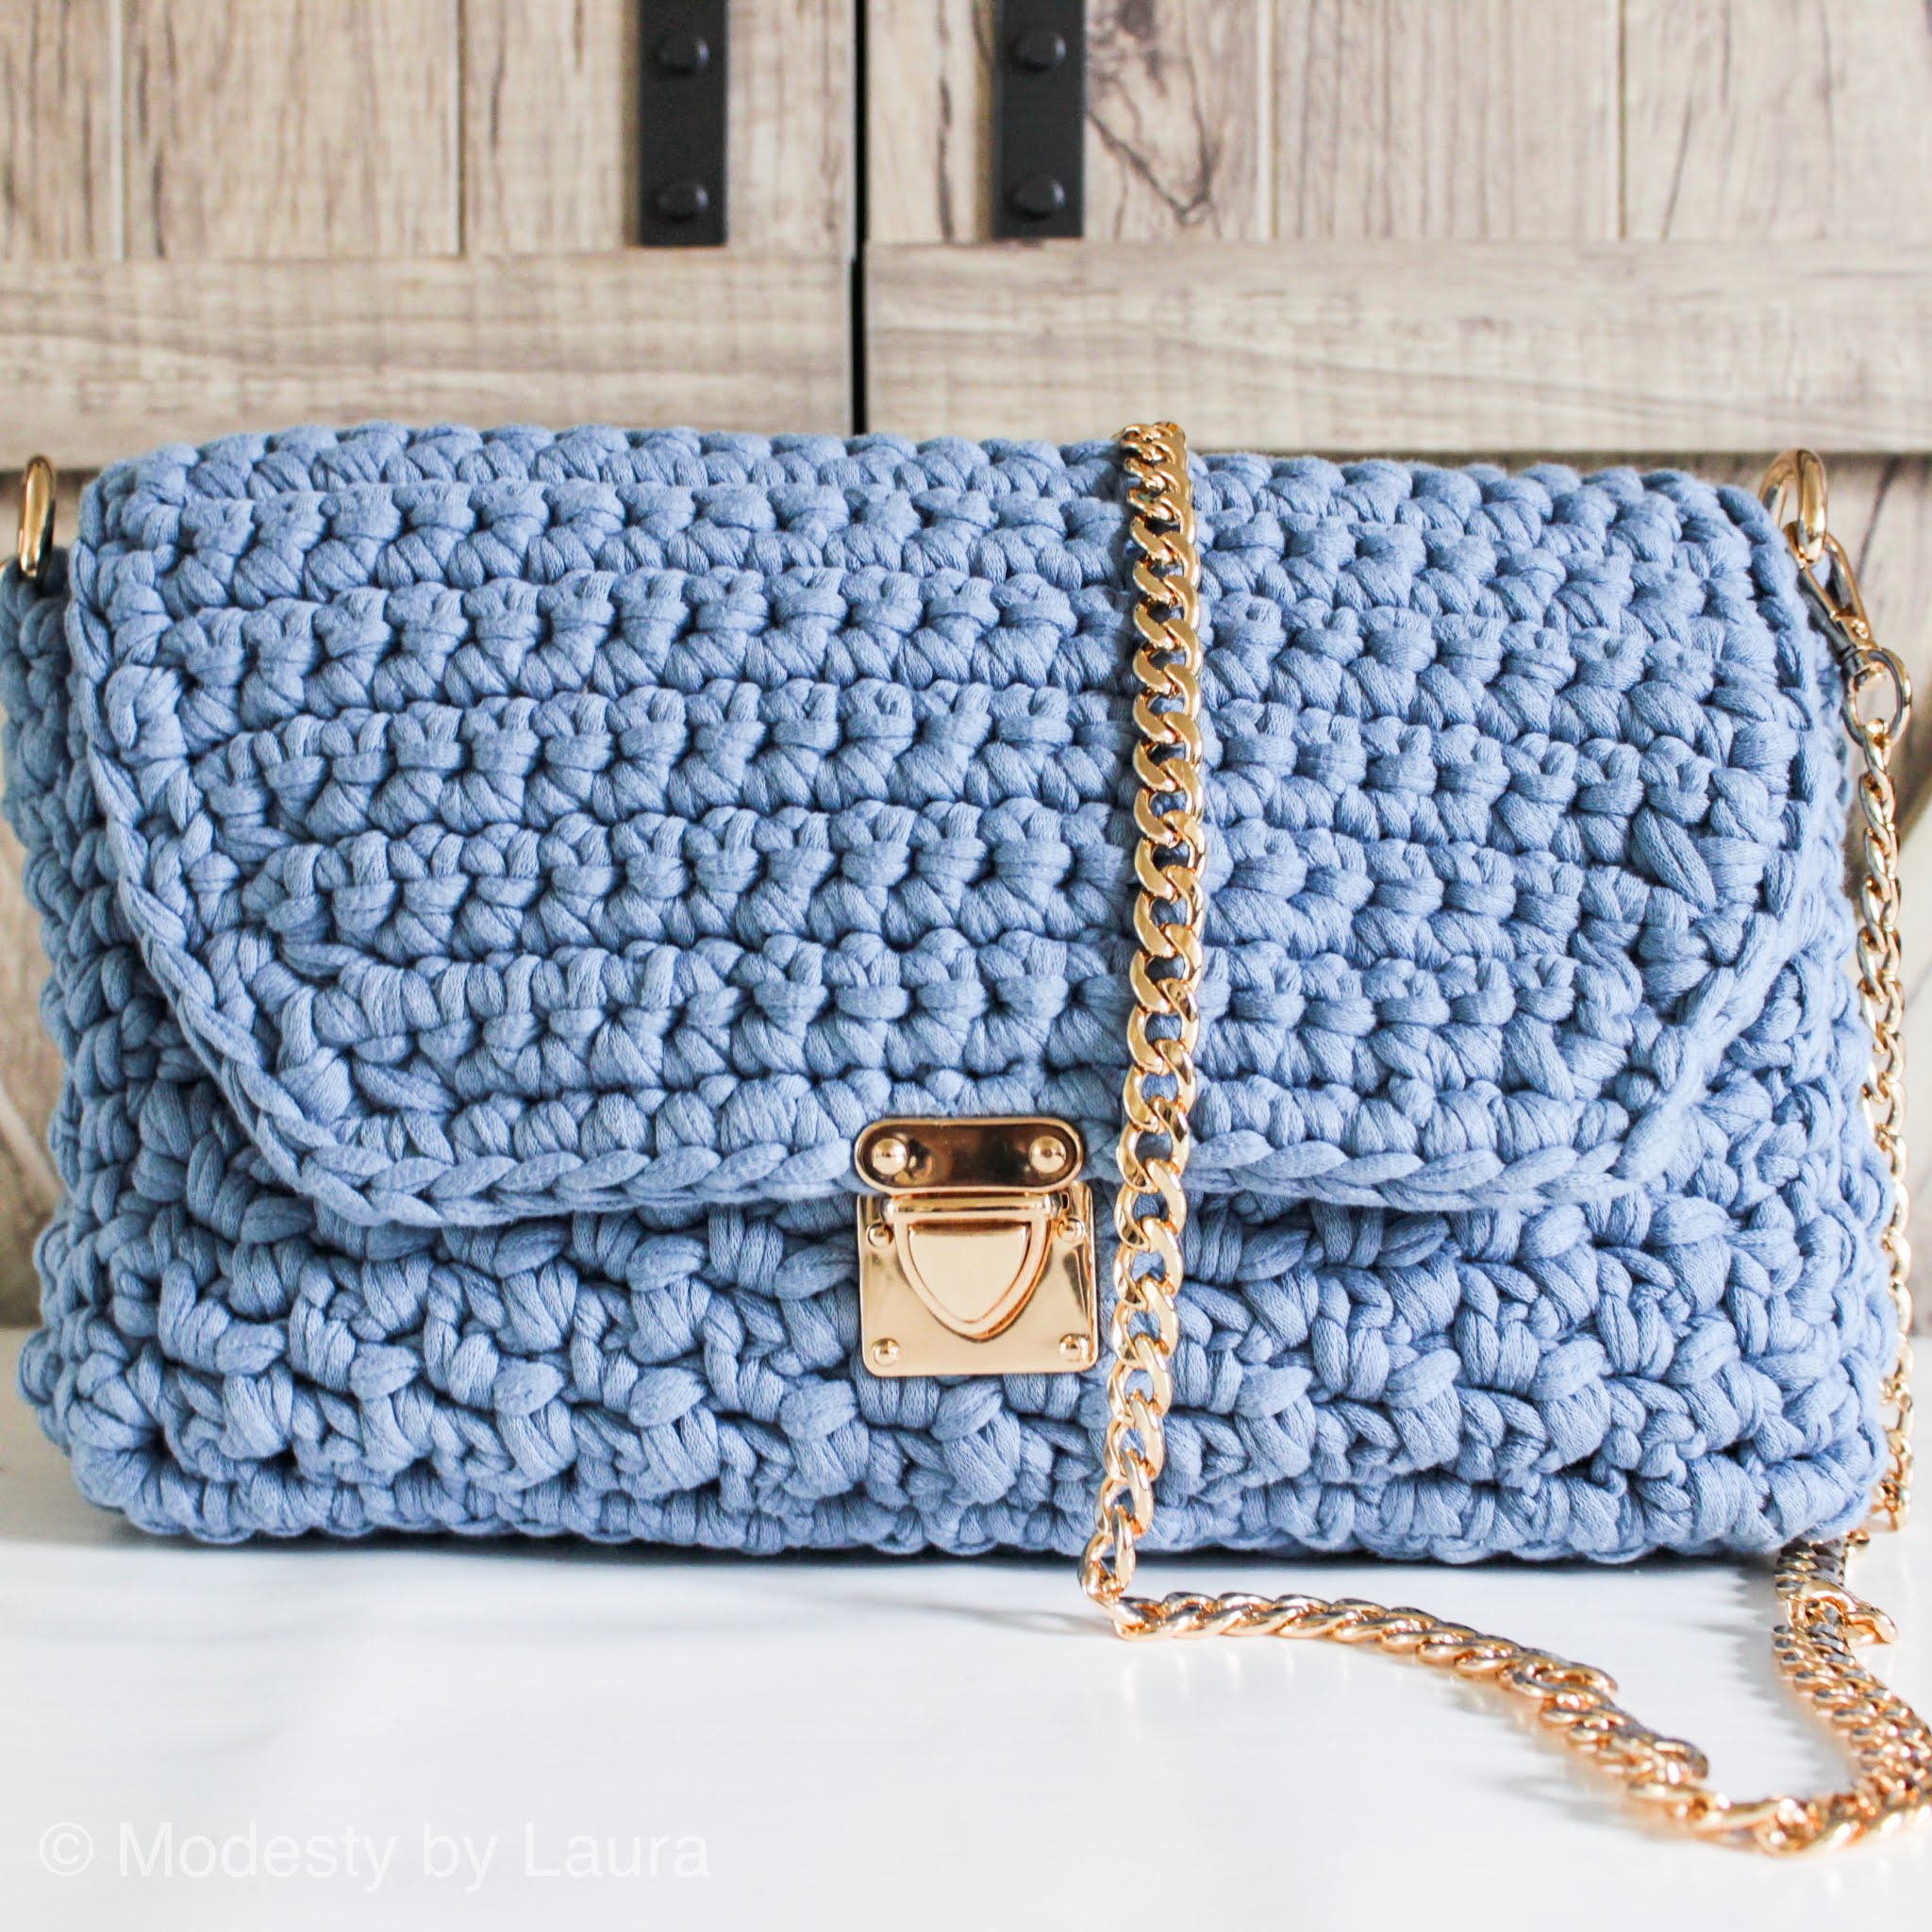 Modesty by Laura Middleton Purse crochet pattern.